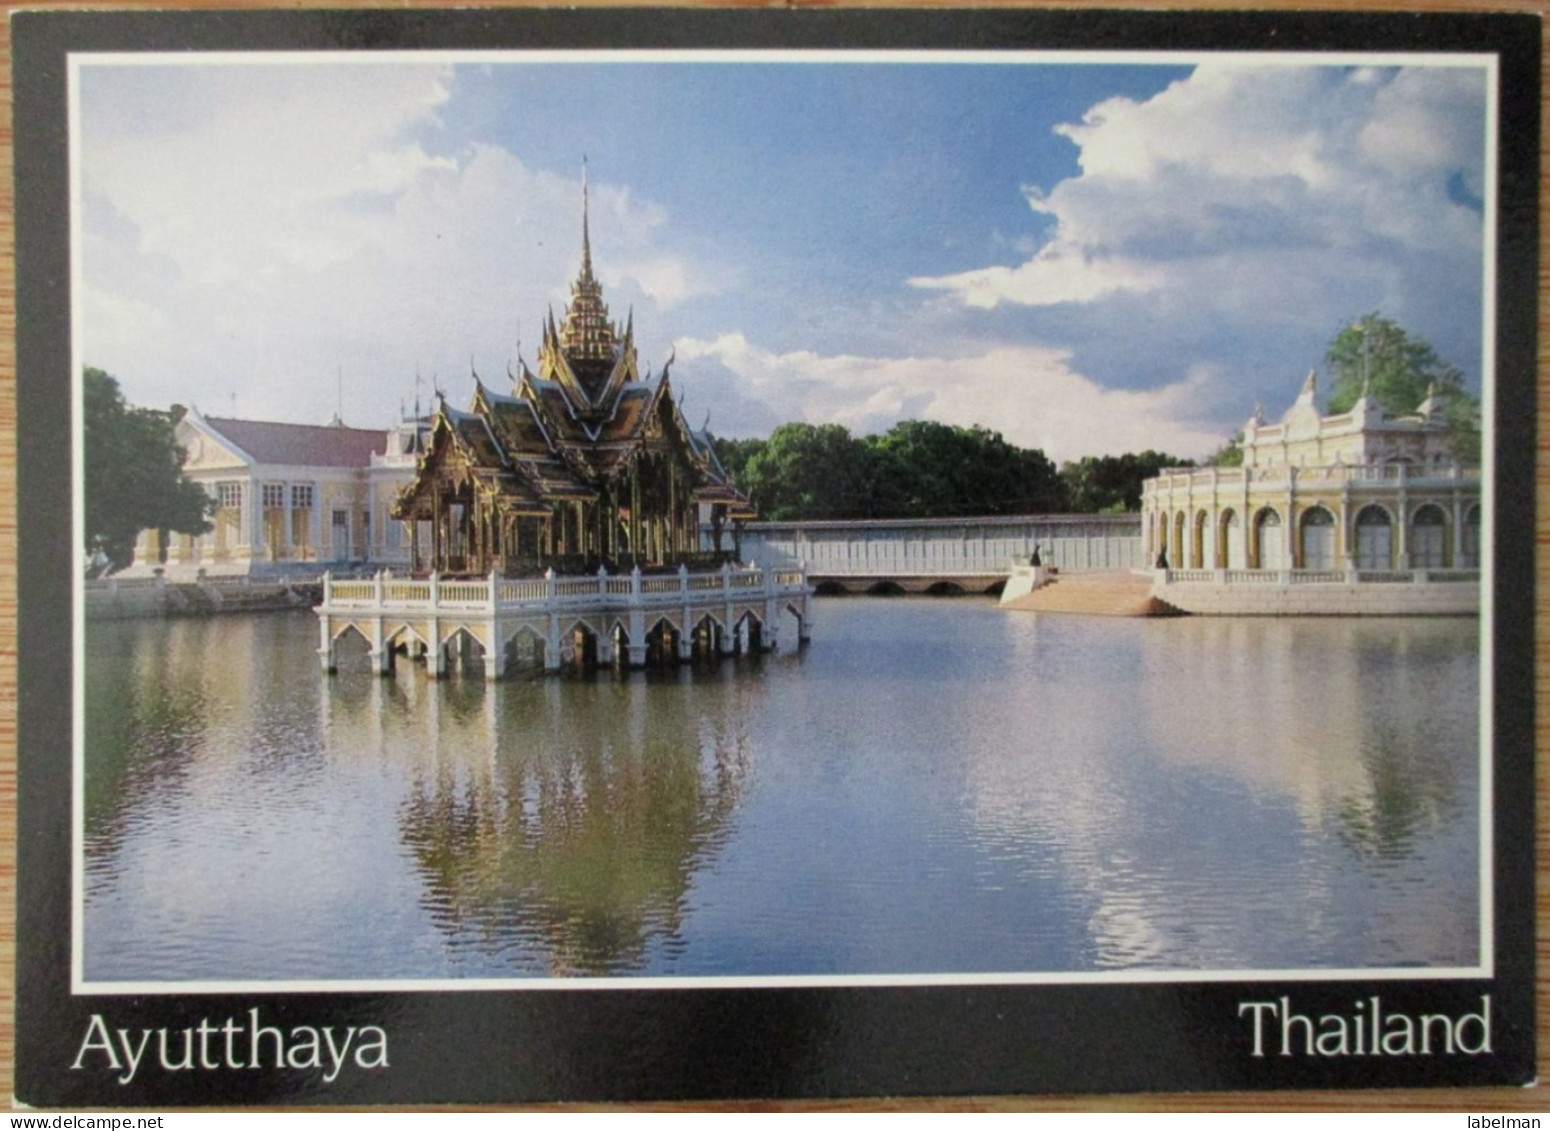 THAILAND BANG PA IN AYUTTHAYA CARTE POSTALE POSTKARTE POSTCARD ANSICHTSKARTE PICTURE CARTOLINA PHOTO CARD - Thailand